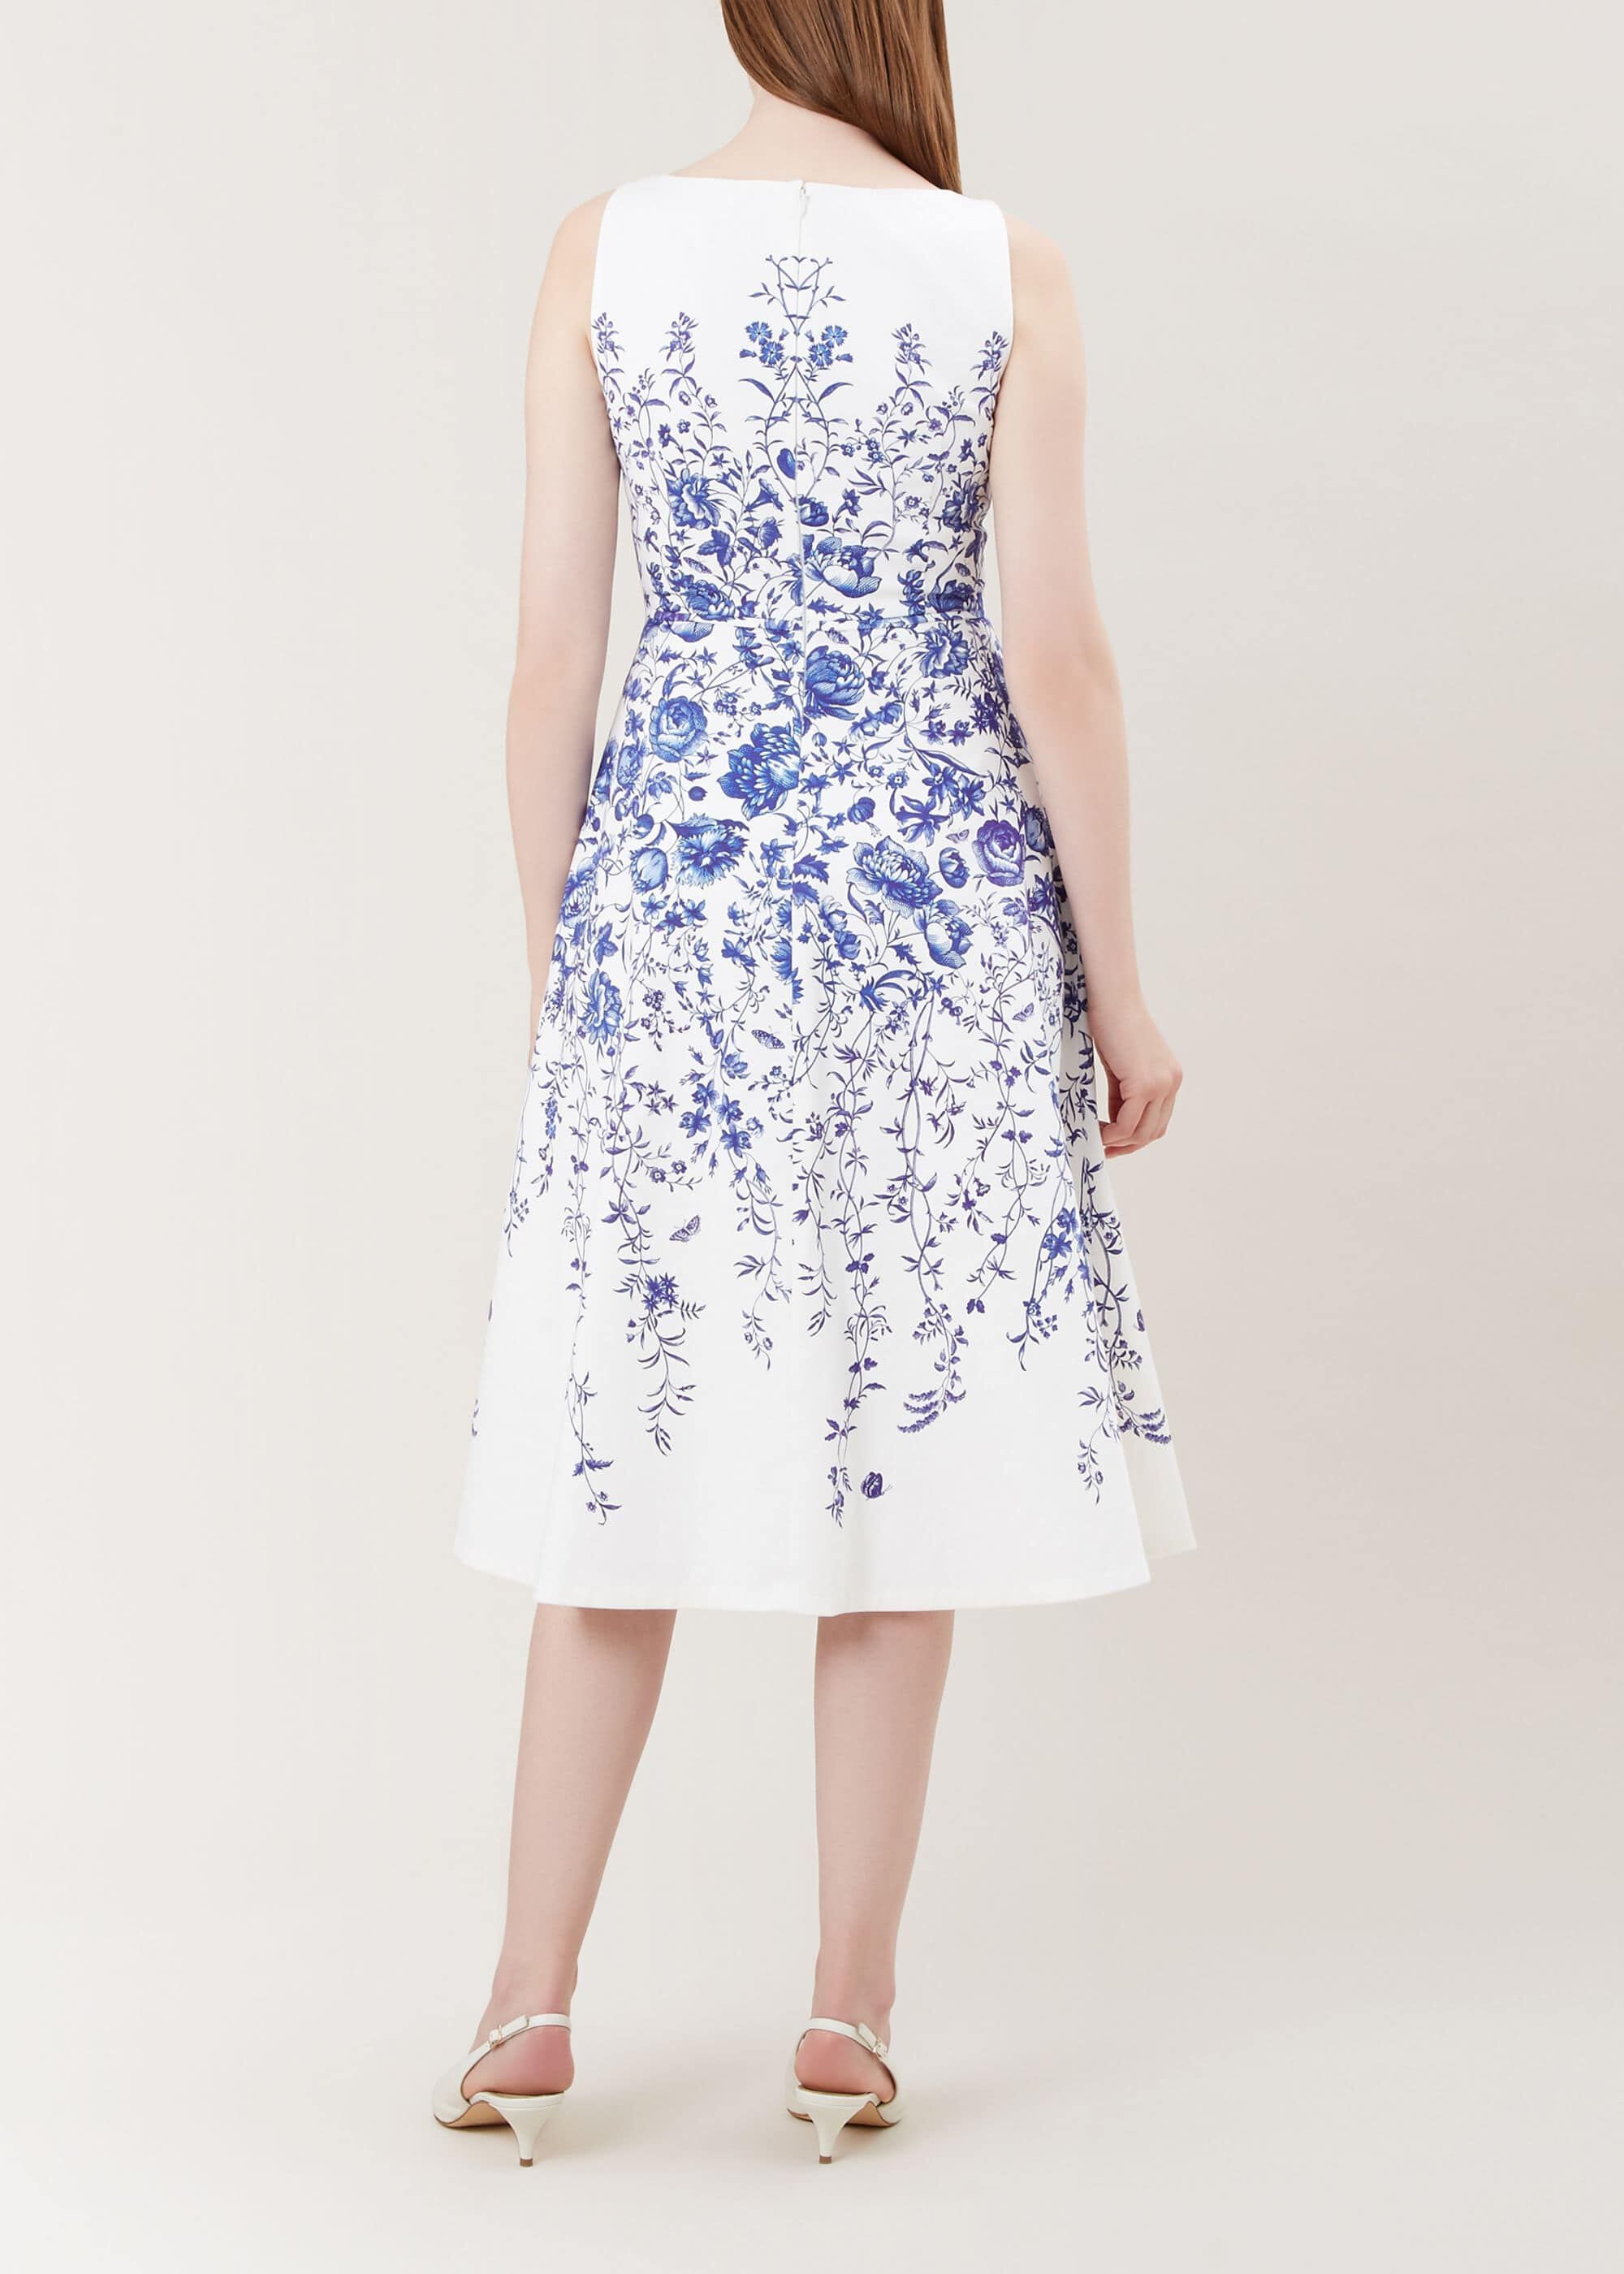 Hobbs Floral Evelyn Dress Mid Calf Fit & Flare Dress Sleeveless | eBay